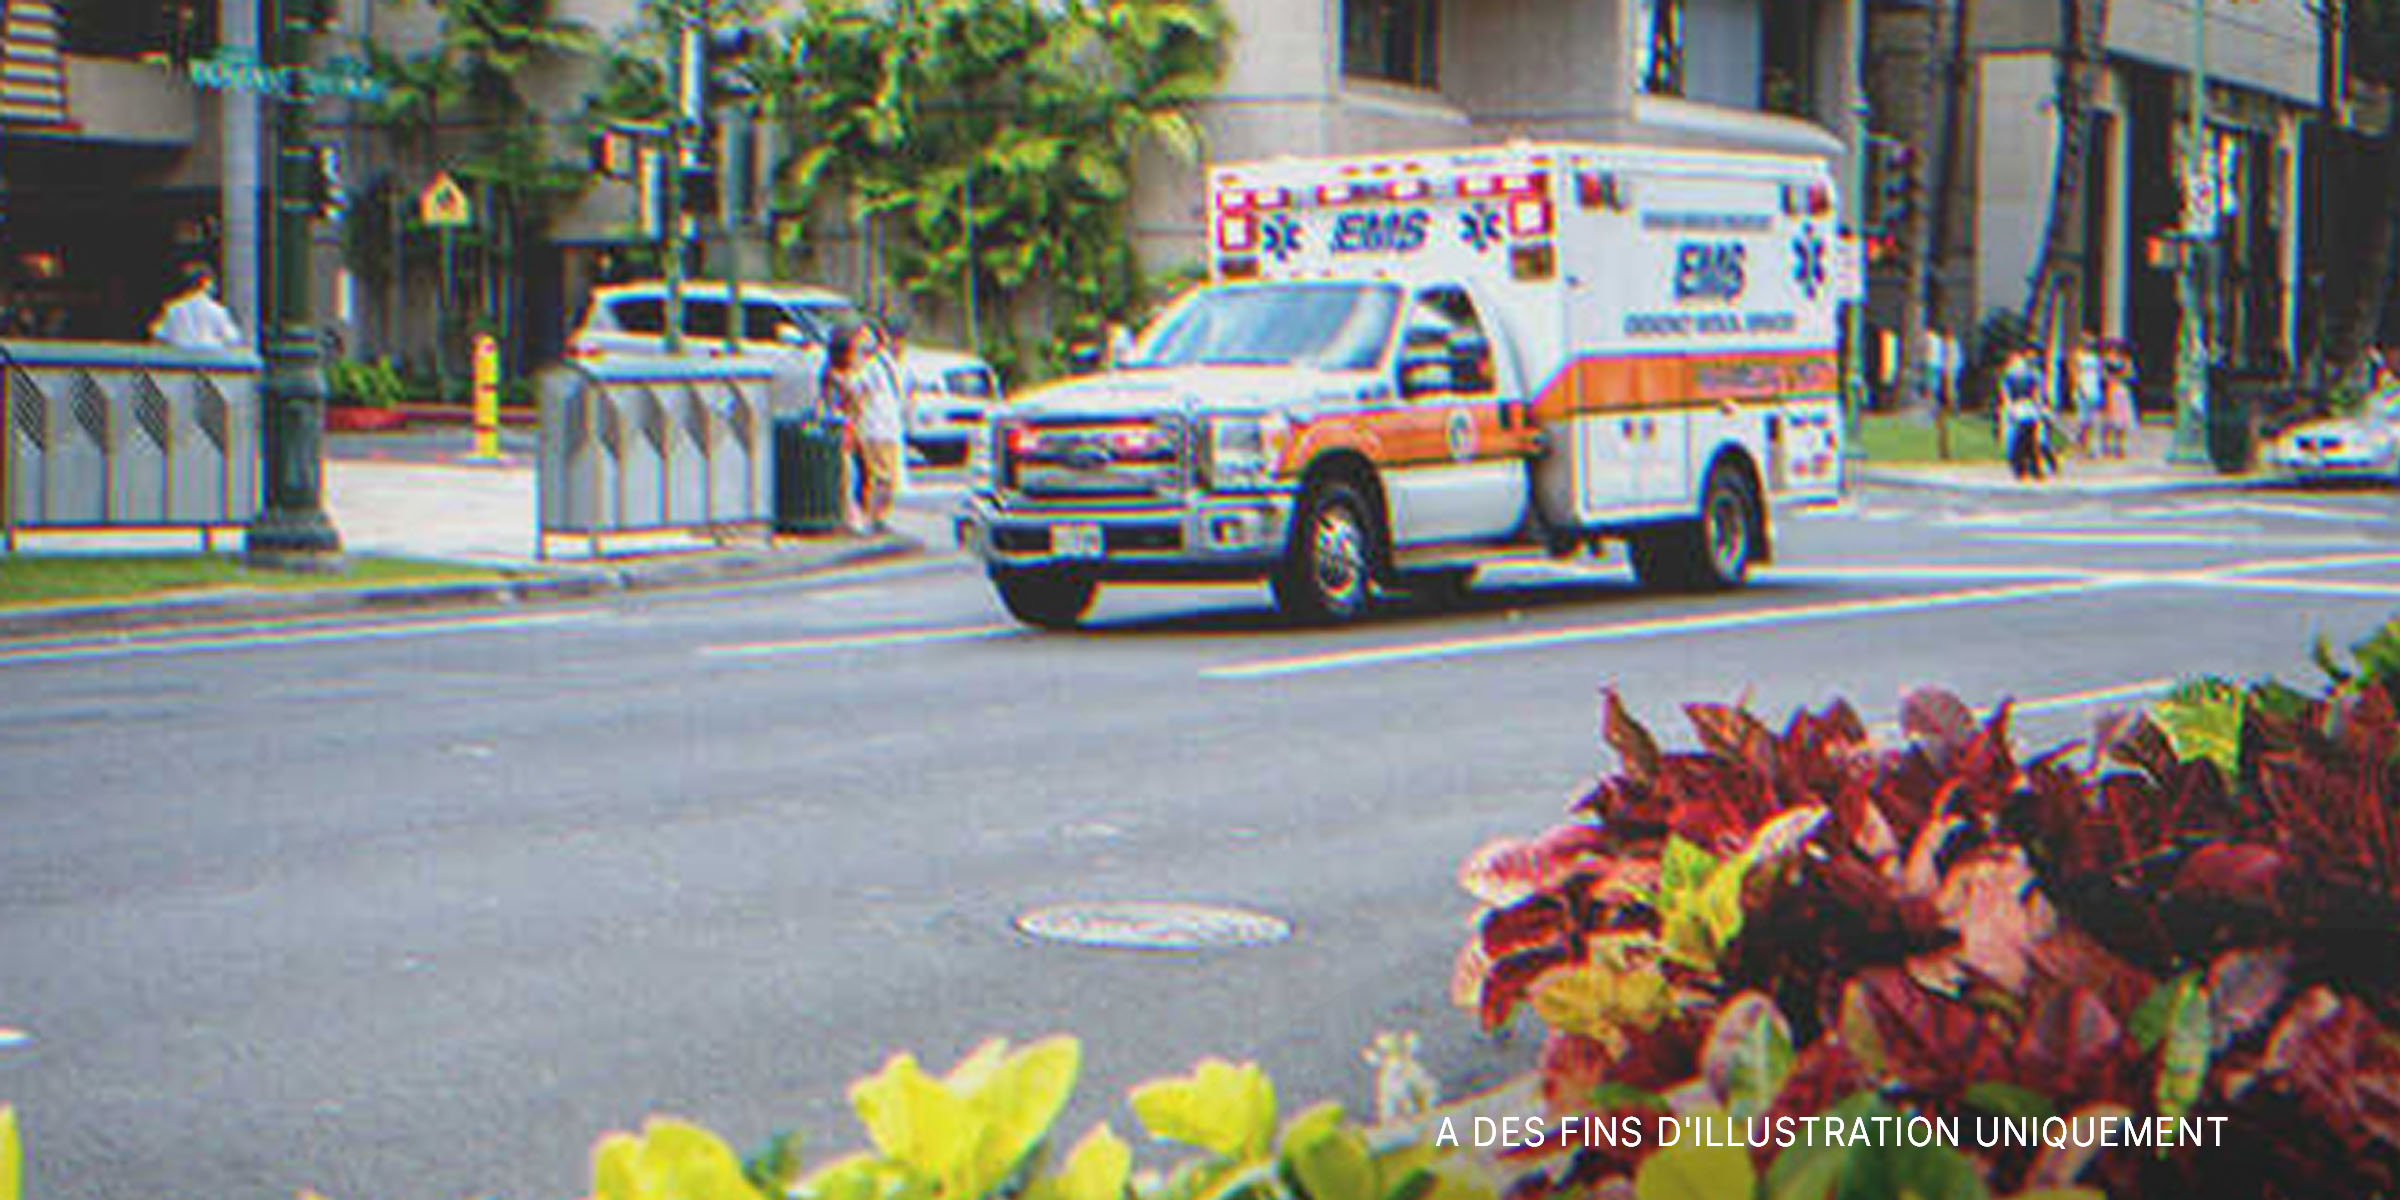 Une ambulance | Source : Shutterstock